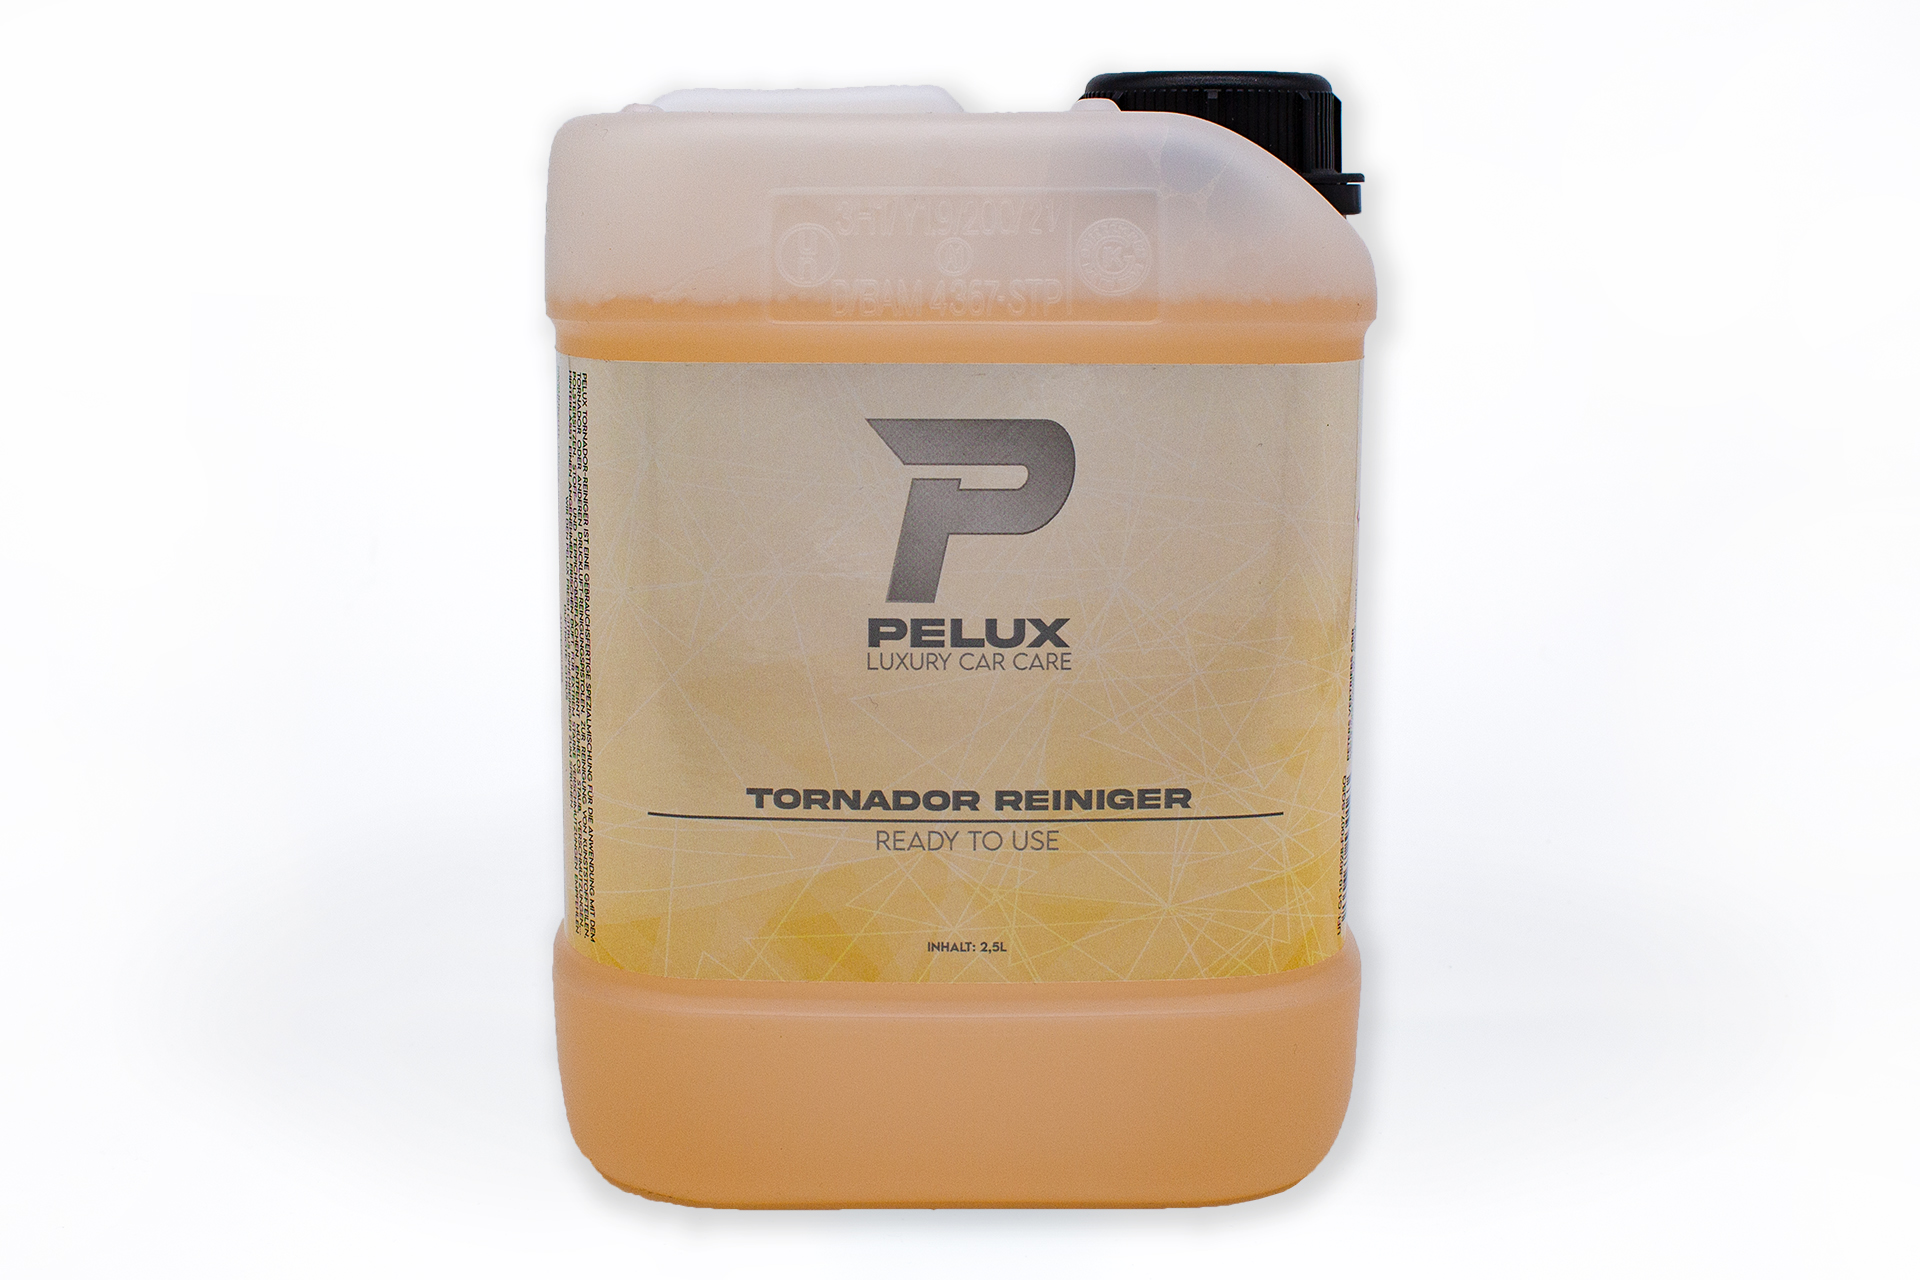 PELUX Tornador Reiniger - Ready to use